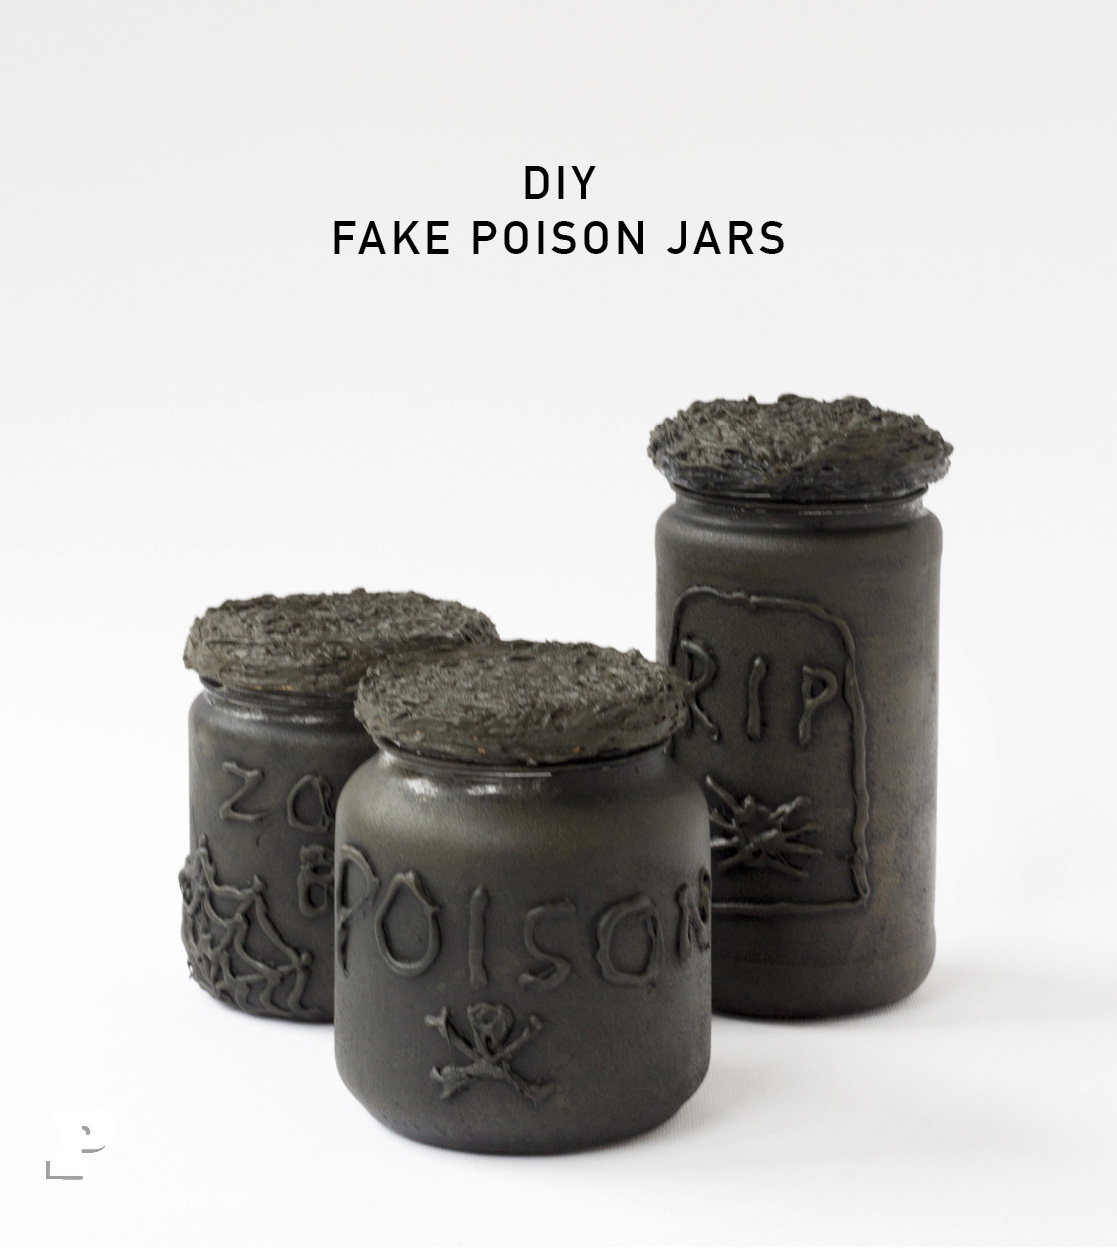 Fake Poison Jars by Pysselbolaget